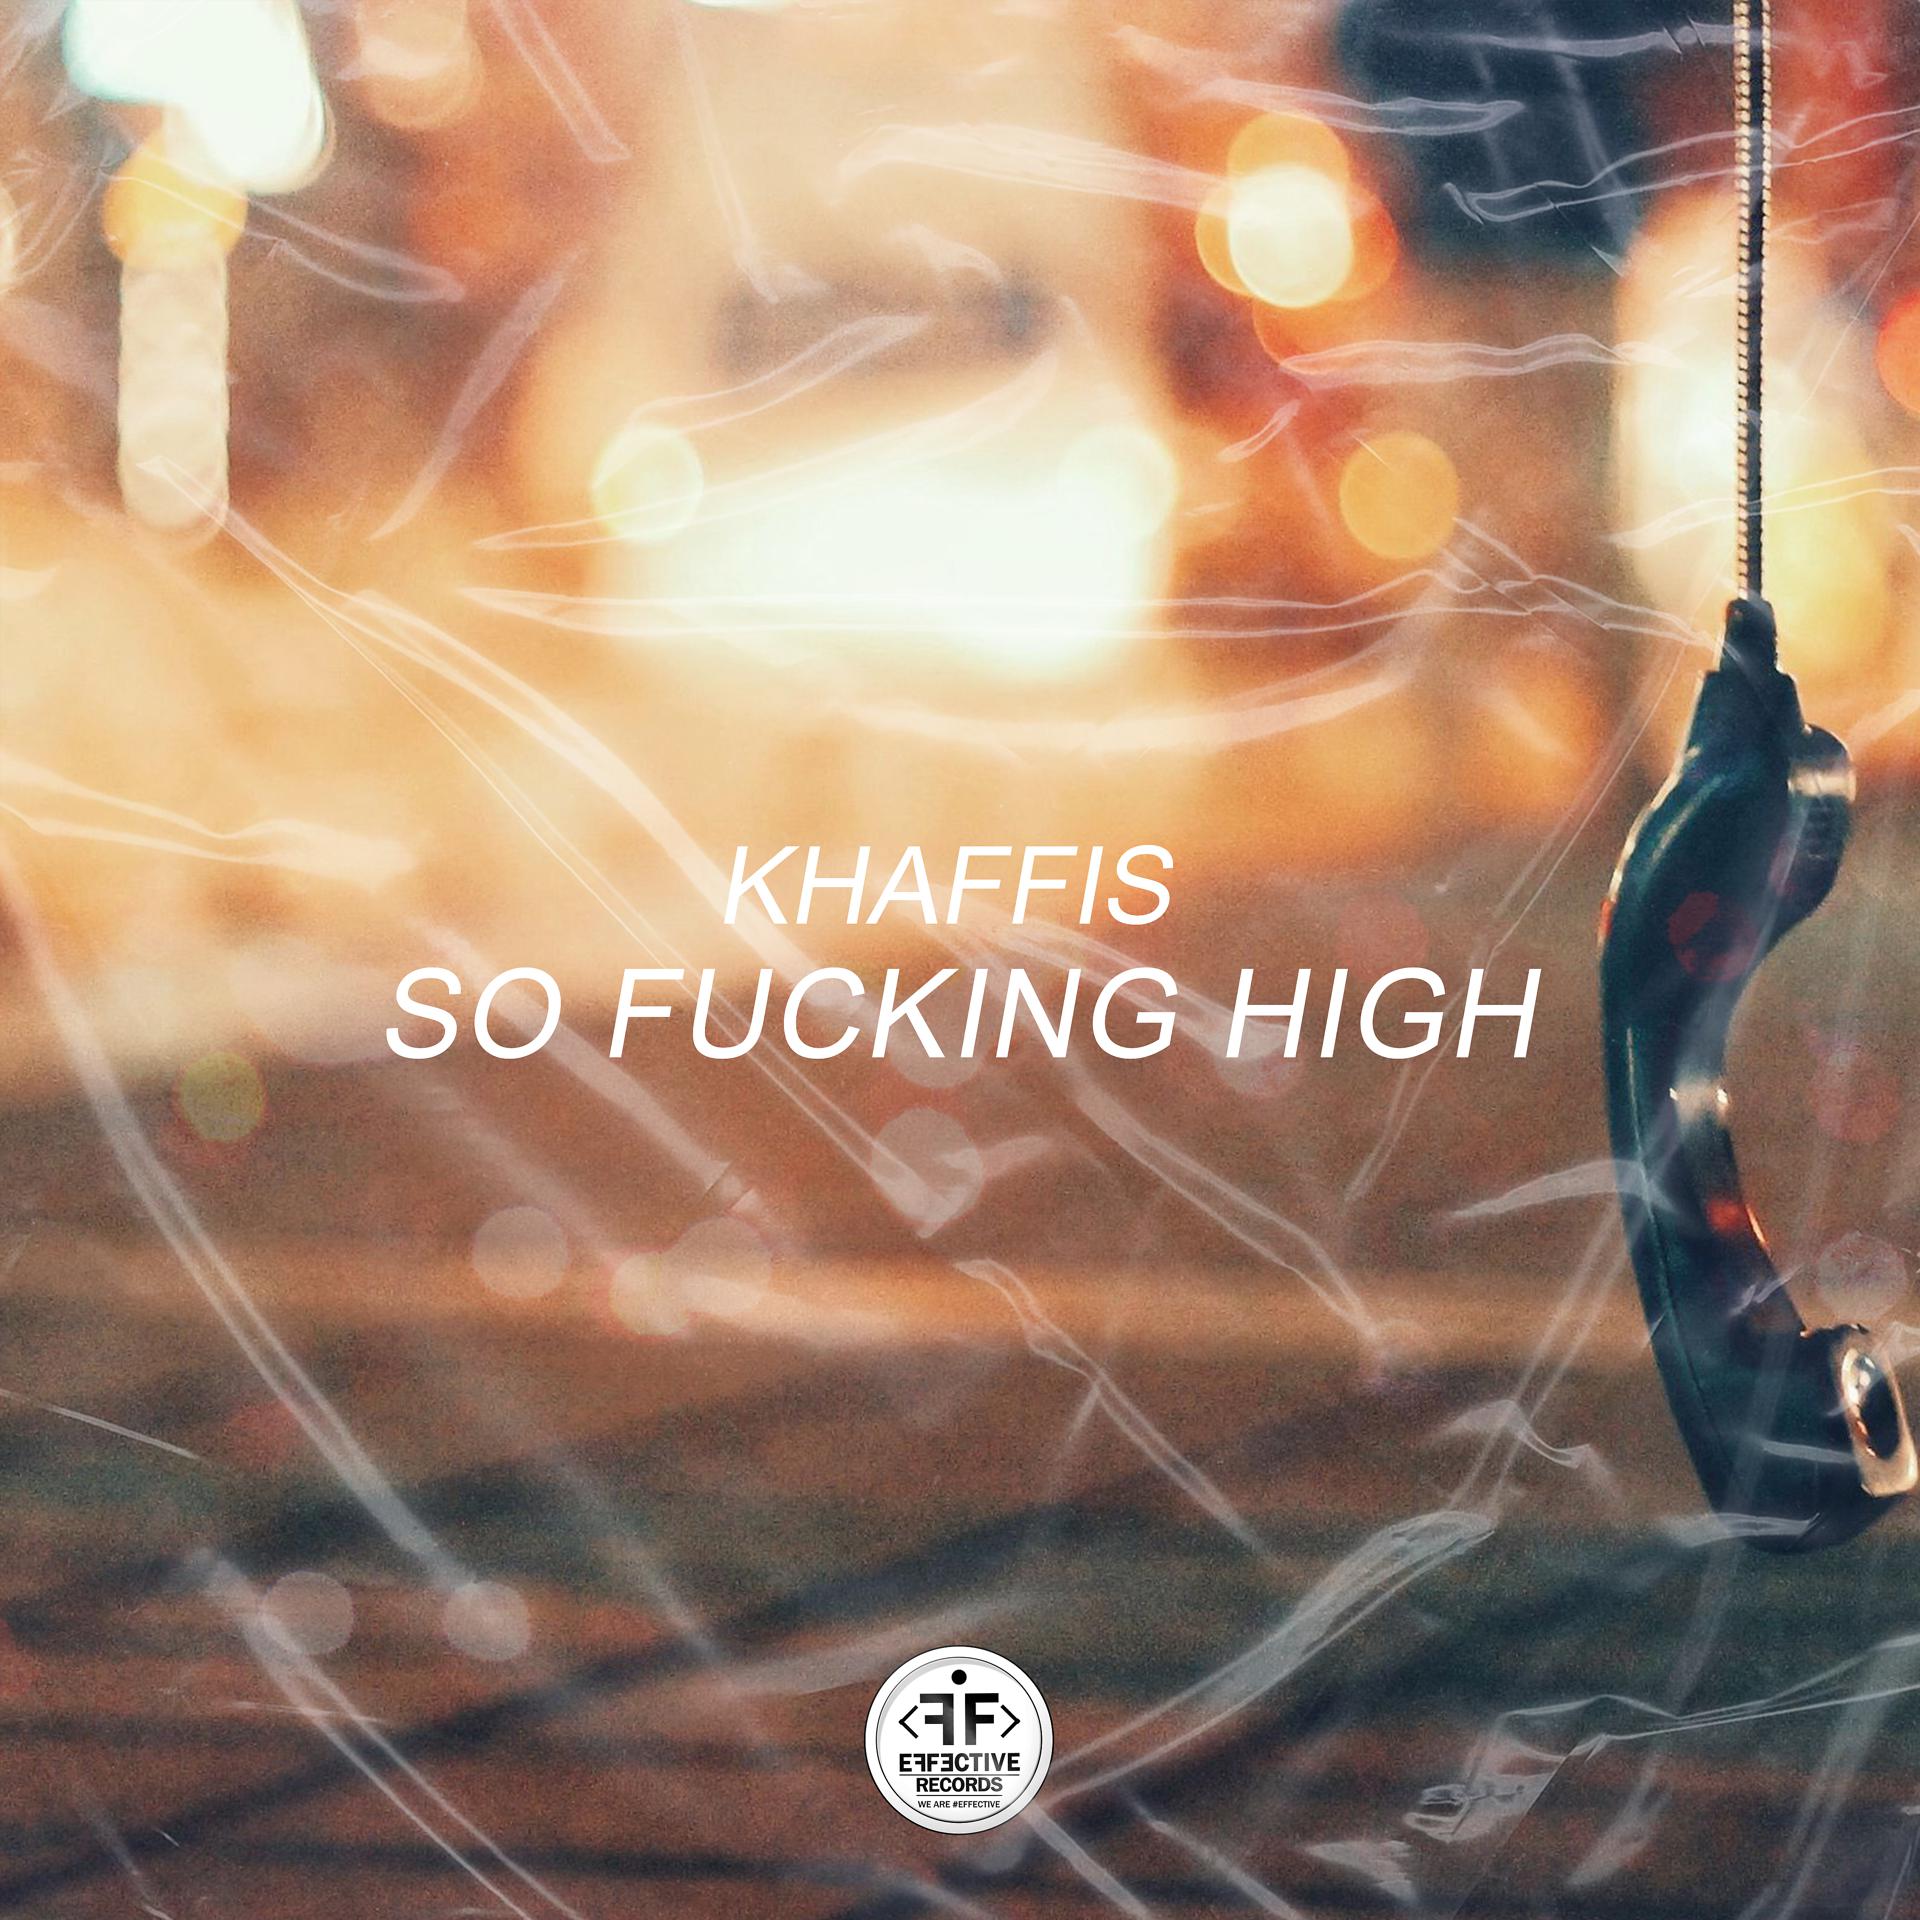 Постер к треку Khaffis - So Fucking High